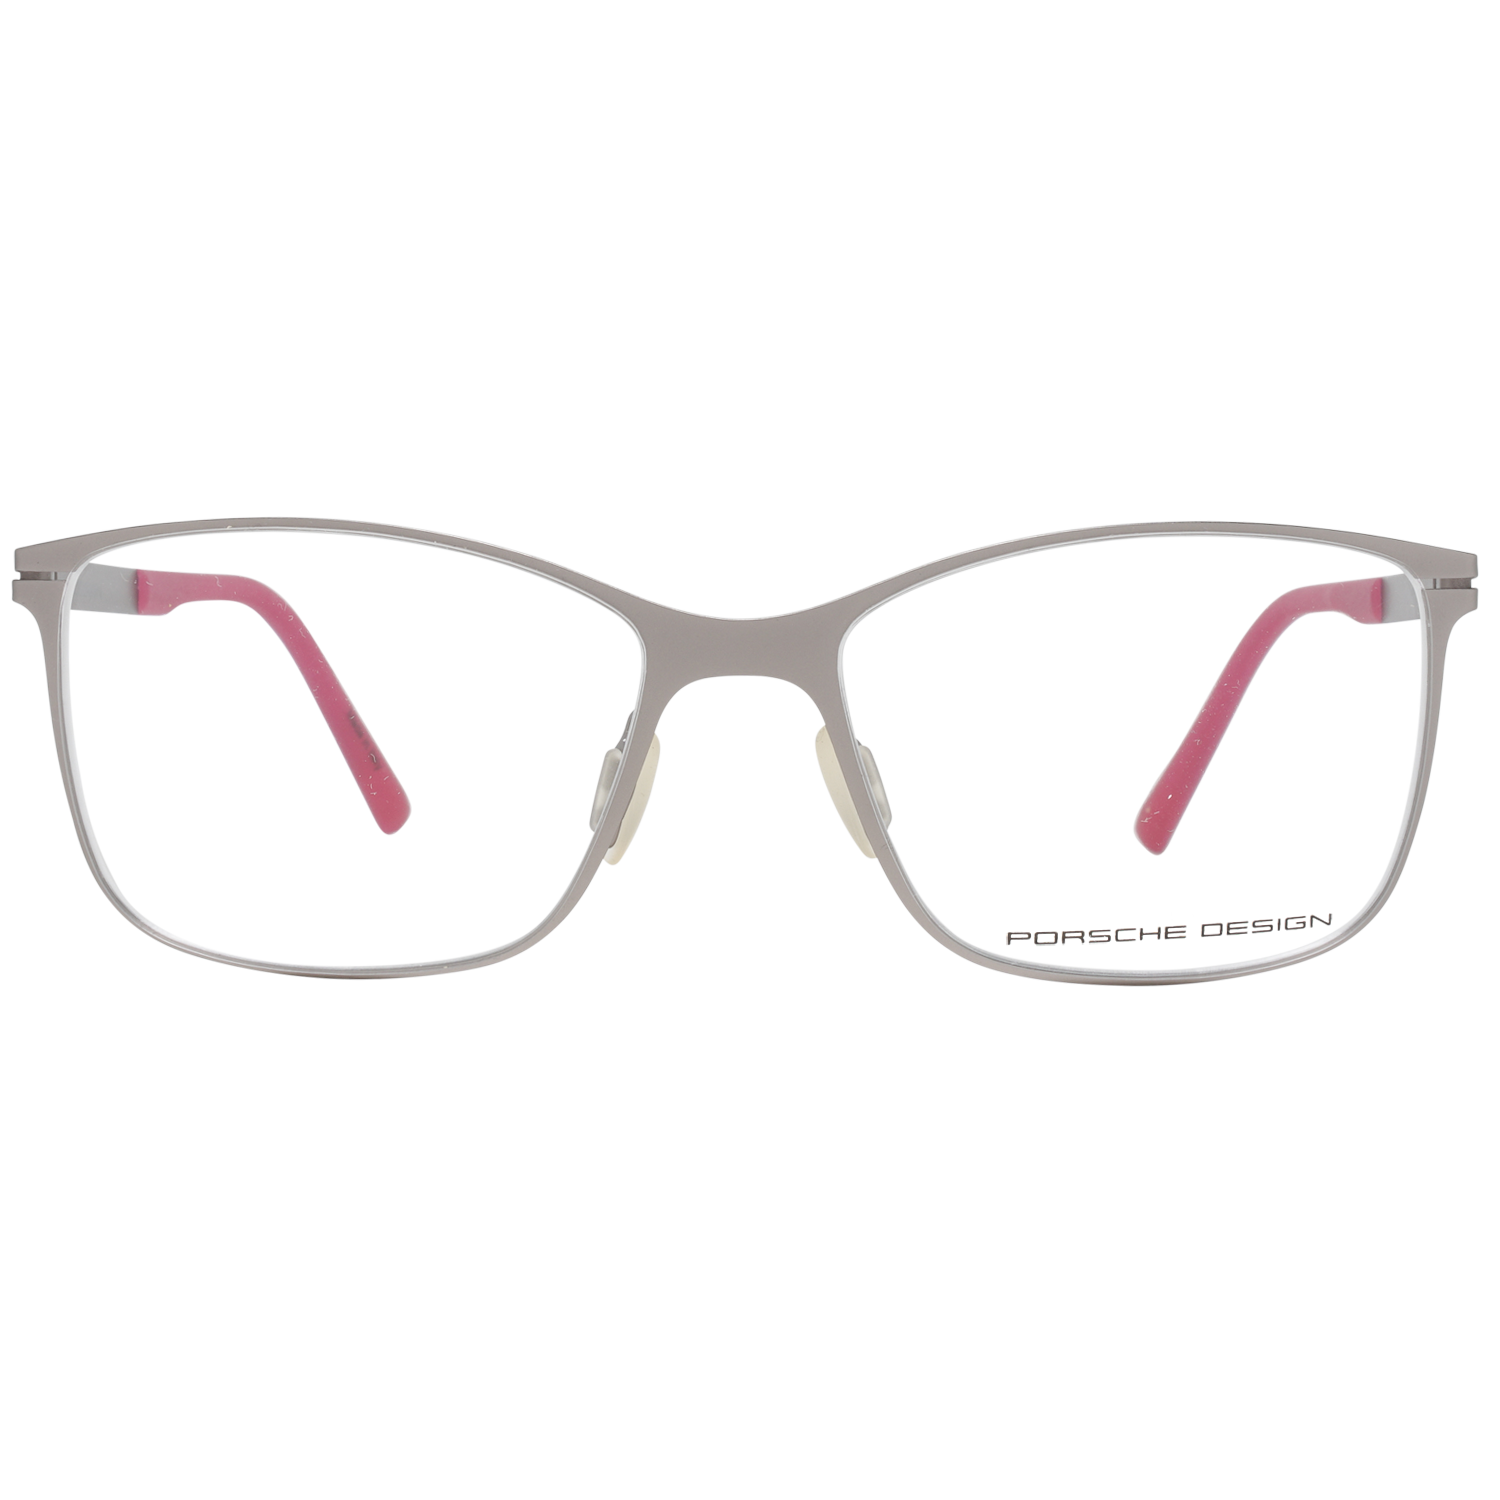 Porsche Design Eyeglasses Porsche Design Glasses Frames P8262 A 54 Eyeglasses Eyewear UK USA Australia 